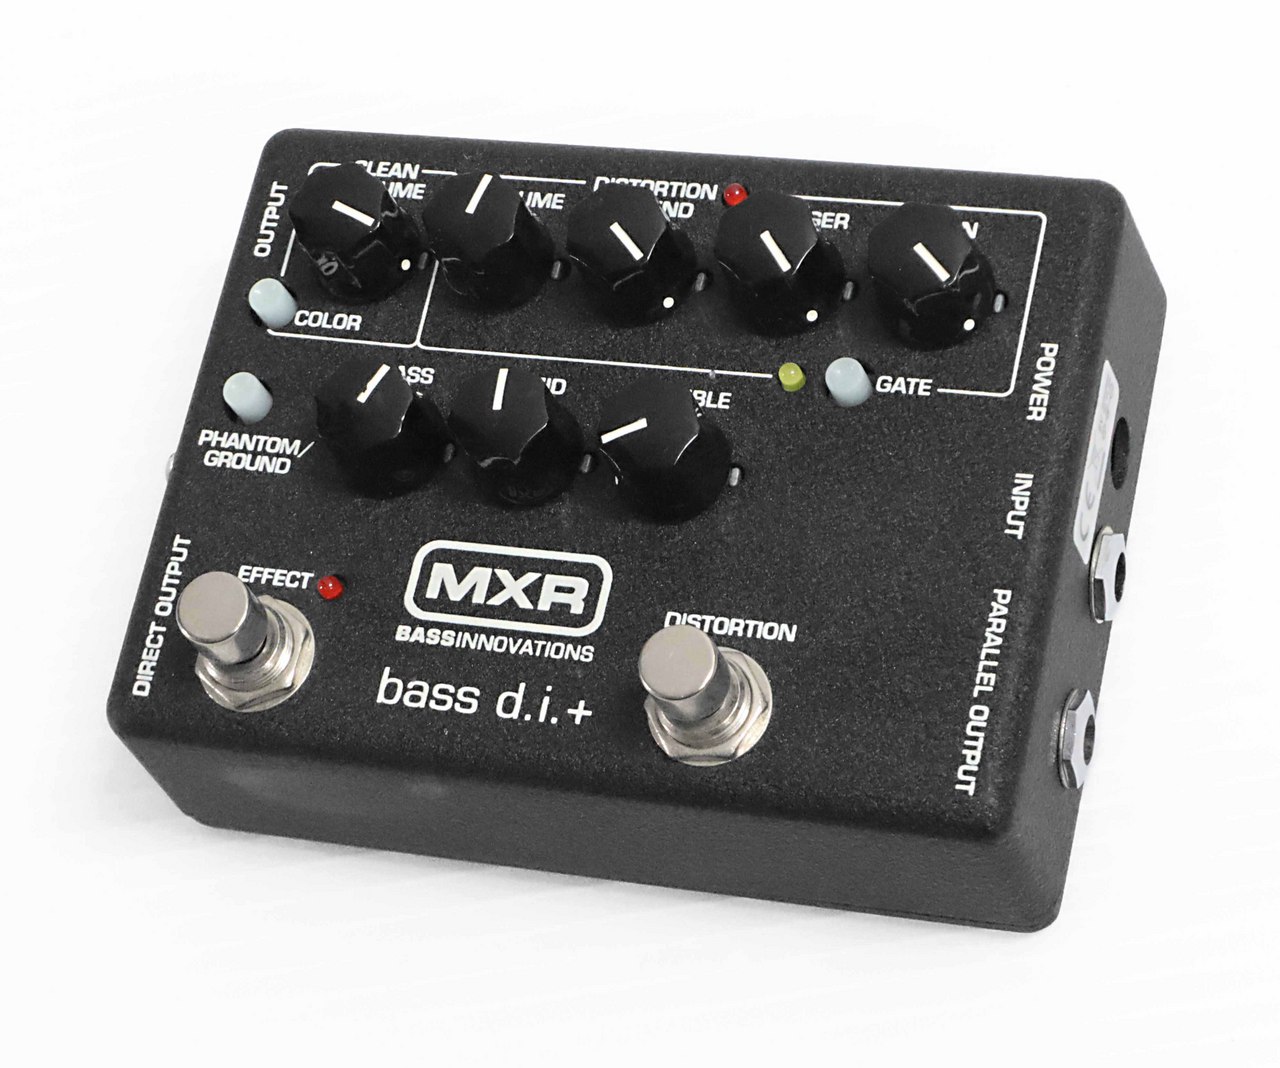 MXR   M80 Bass D.I. + 定番ベースプリアンプ